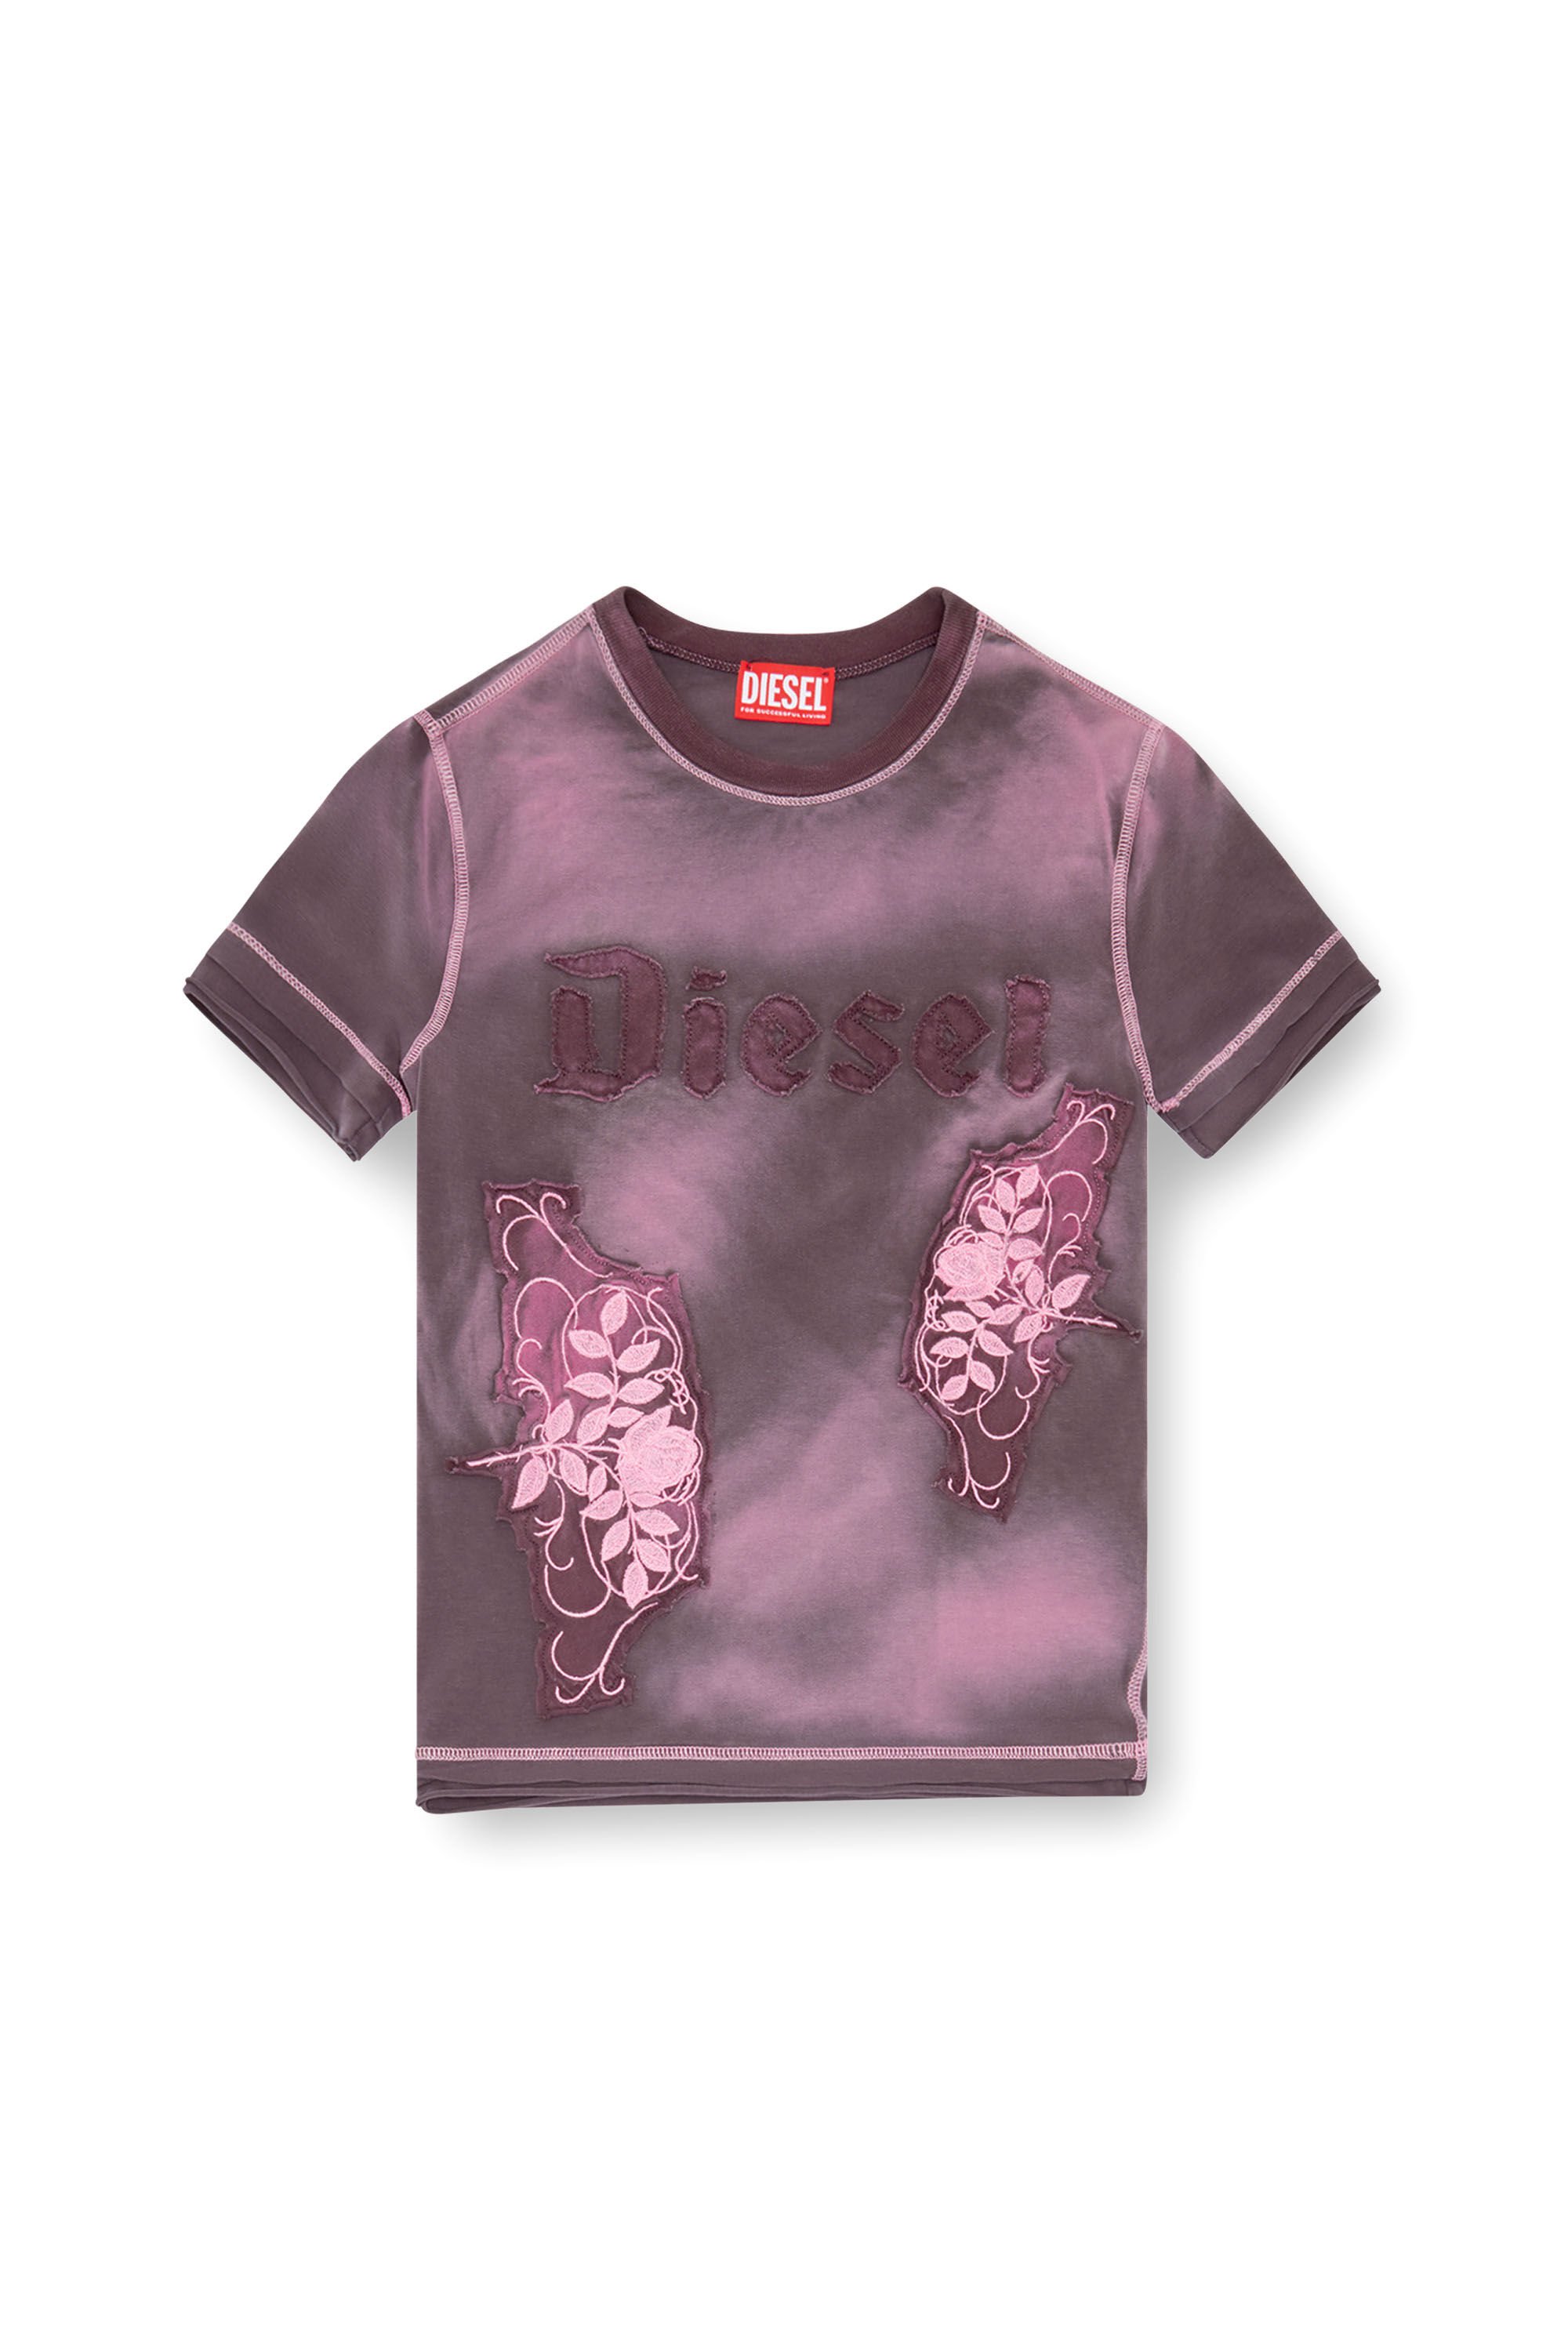 Diesel - T-UNCUT, Donna T-shirt con patch floreali ricamati in Viola - Image 2